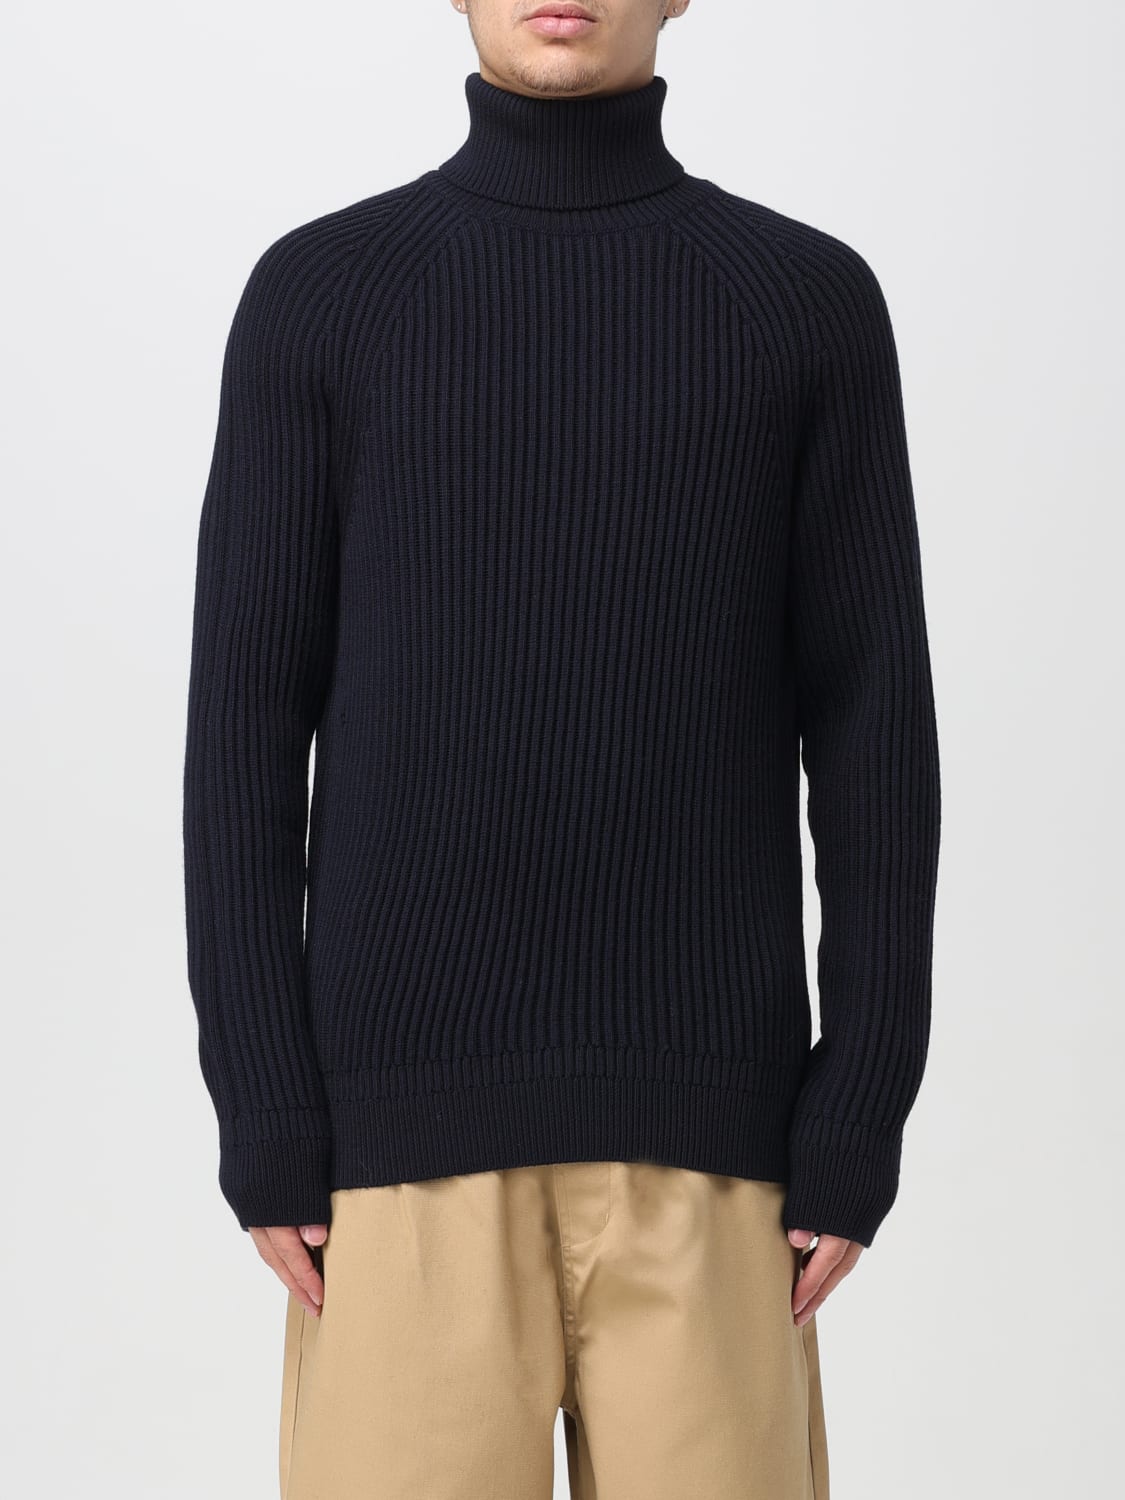 ZANONE: sweater for man - Blue | Zanone sweater 812876ZM284 online